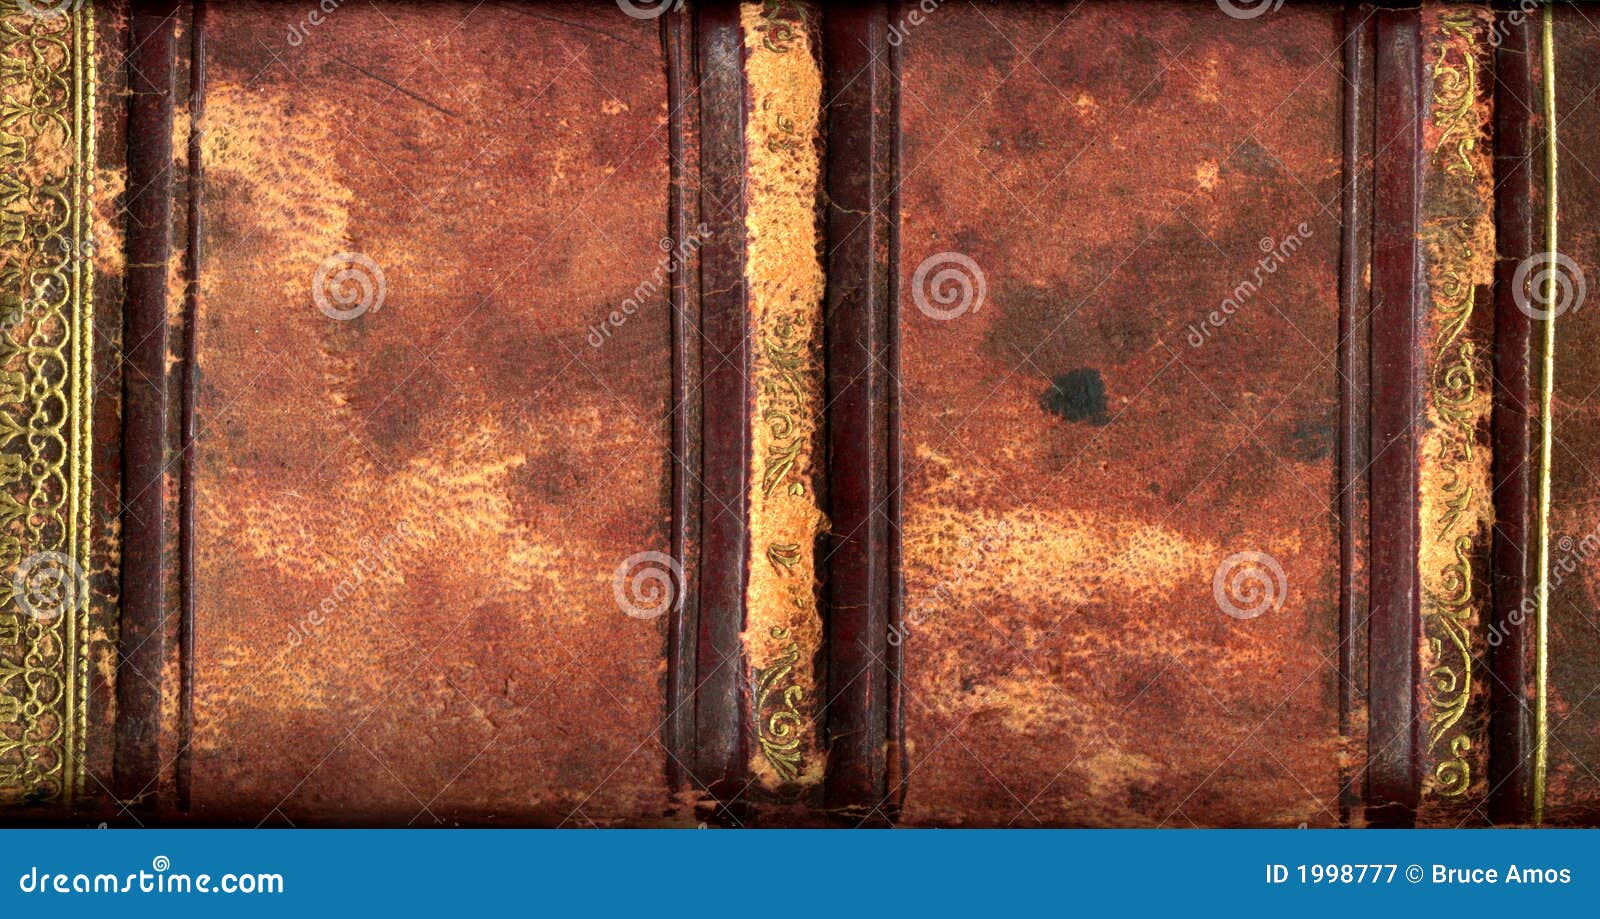 Leather book spine stock image. Image of literature, nostalgia - 1998777